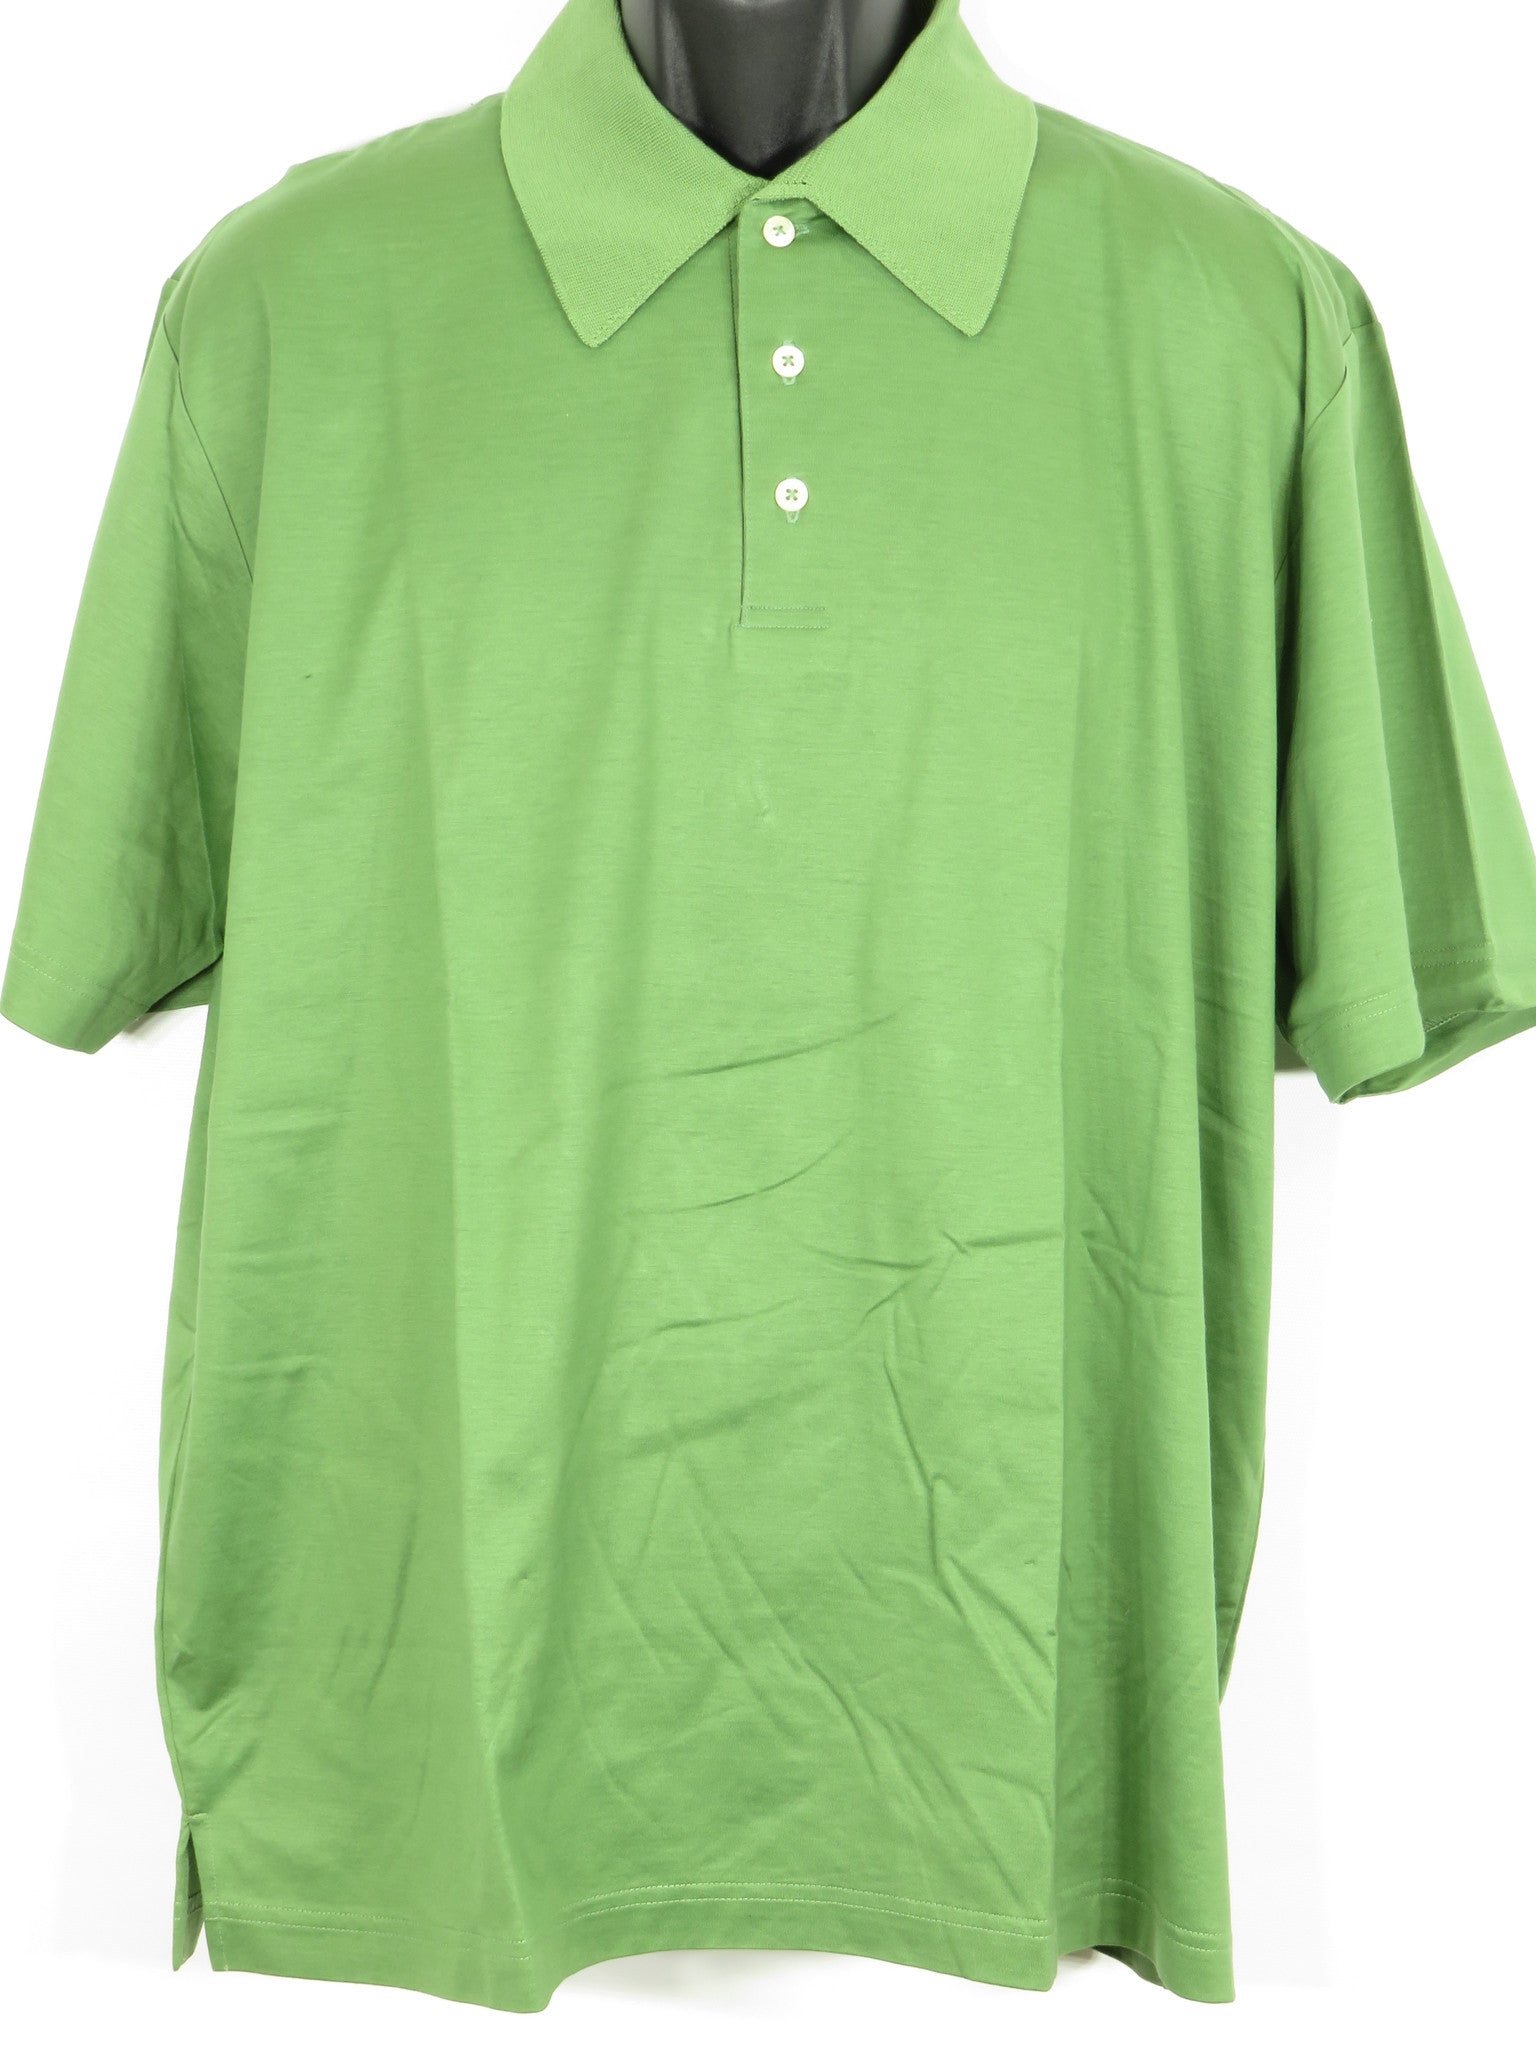 mens green button down shirt